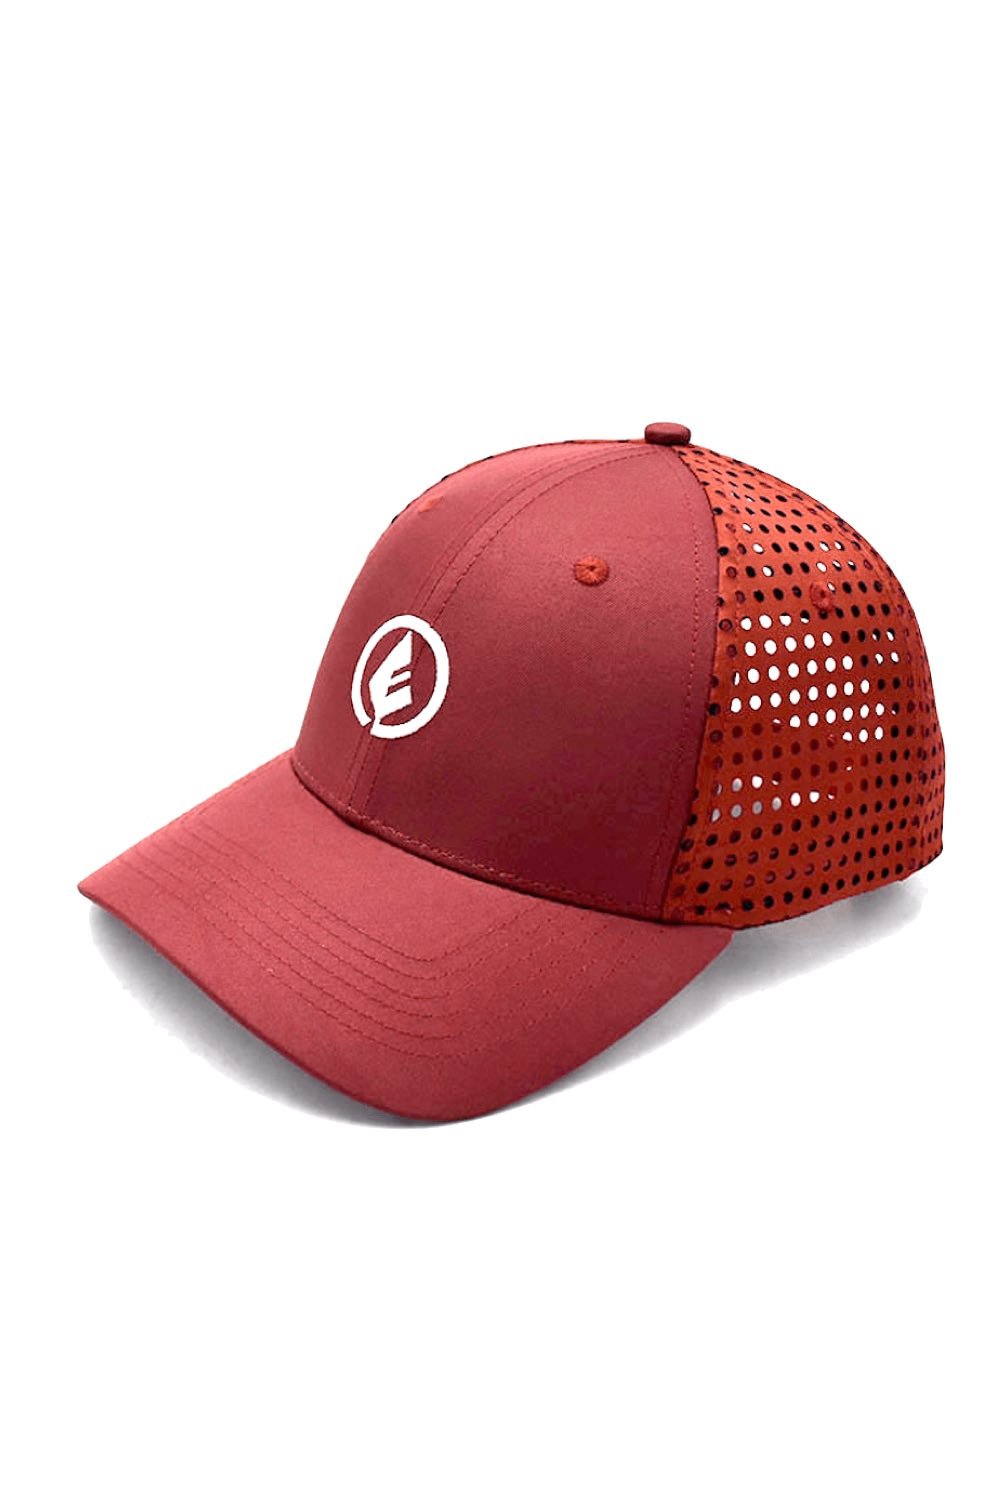 WILD CAP - casquette technique recyclée [red]